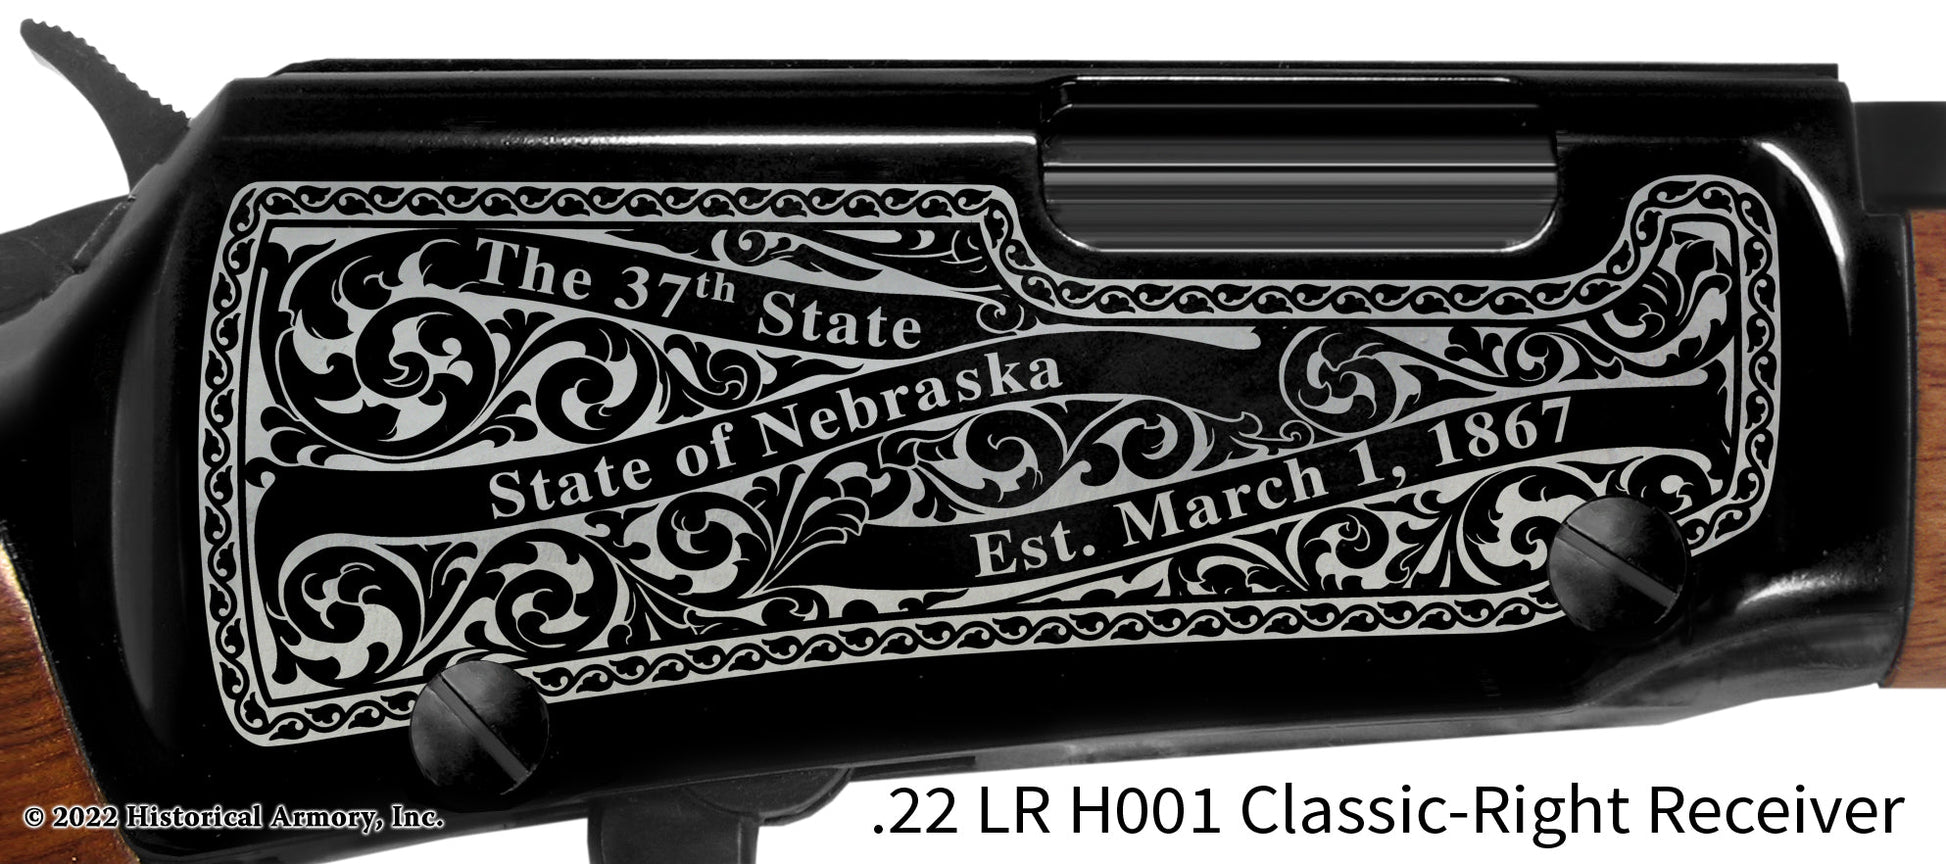 Cass County Nebraska Engraved Henry H001 Rifle